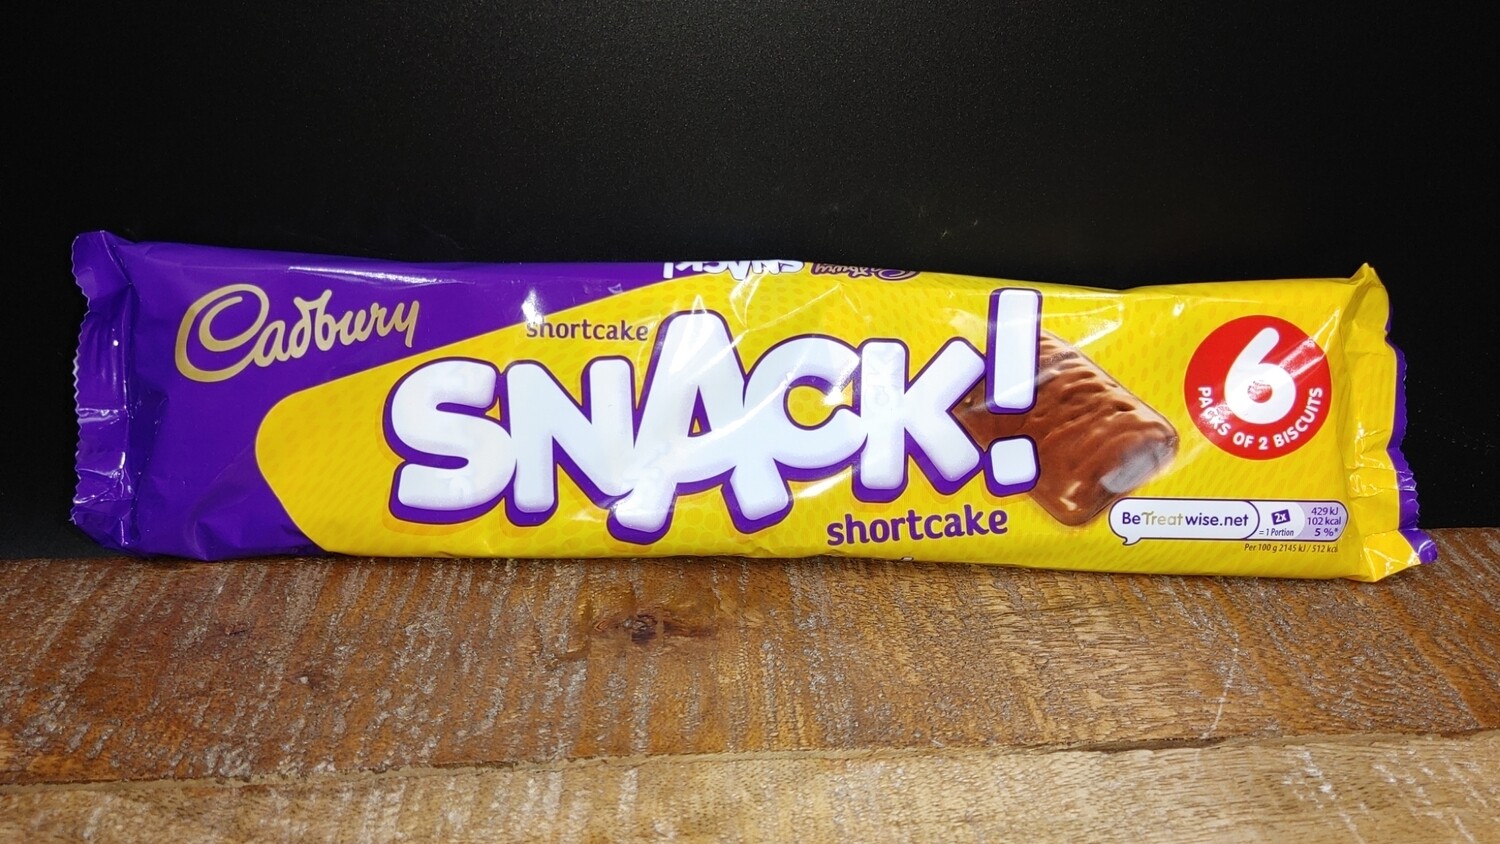 Cadbury Shortcake Snack! 6 pack 120g